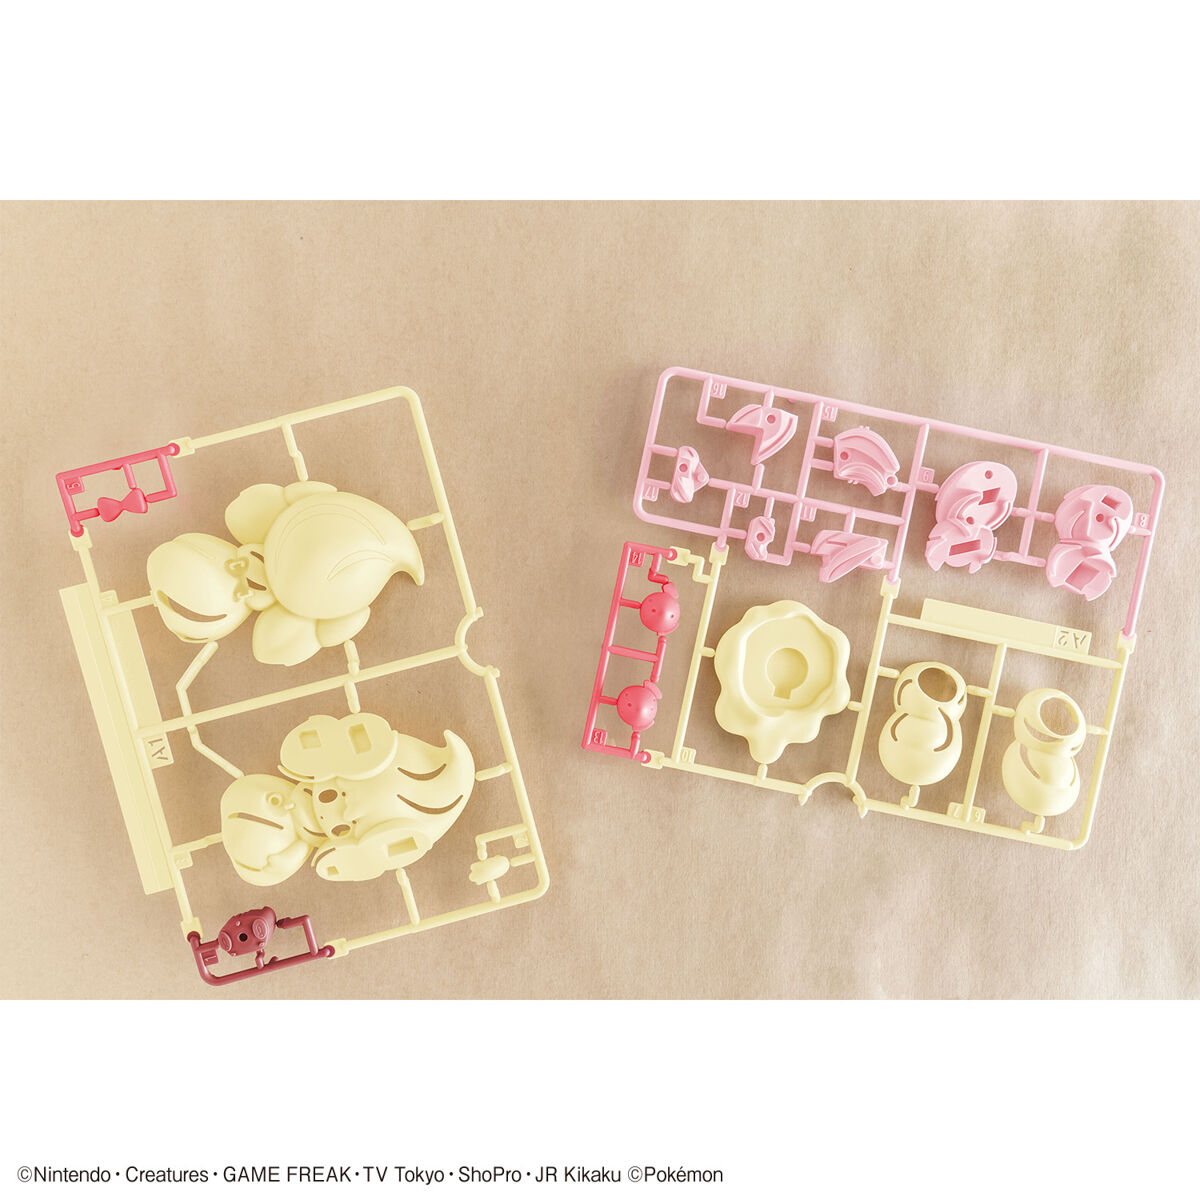 Pokemon Plastic Model Collection Quick!! 12 &quot;Alcremi&quot;-Bandai-Ace Cards &amp; Collectibles